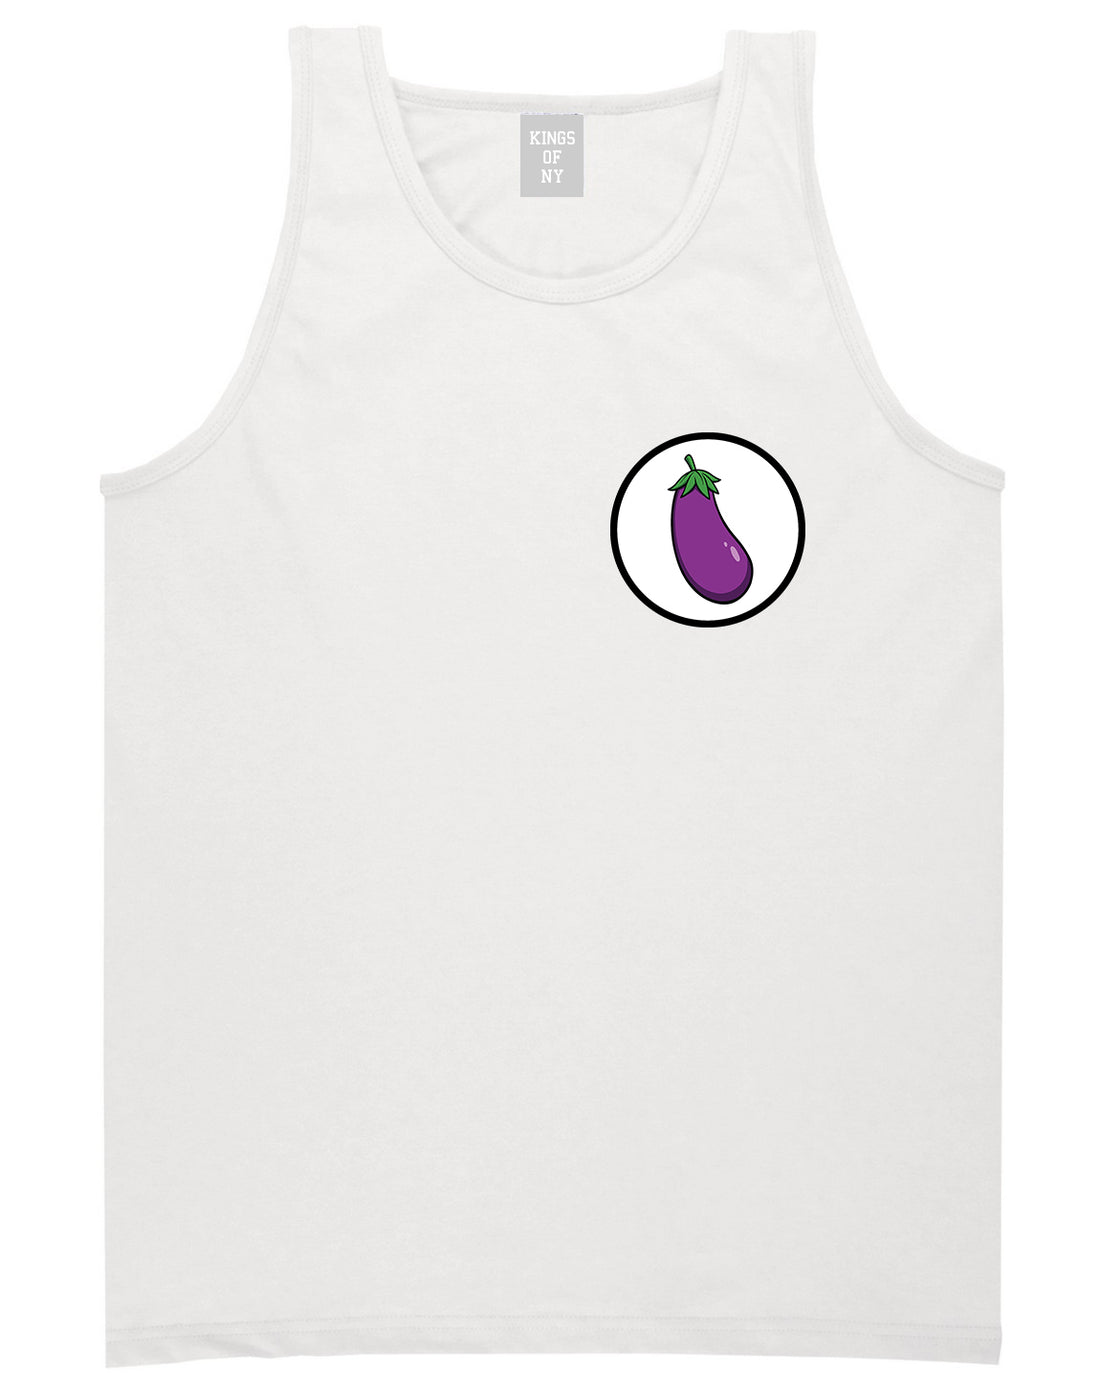 Eggplant_Emoji_Chest Mens White Tank Top Shirt by Kings Of NY